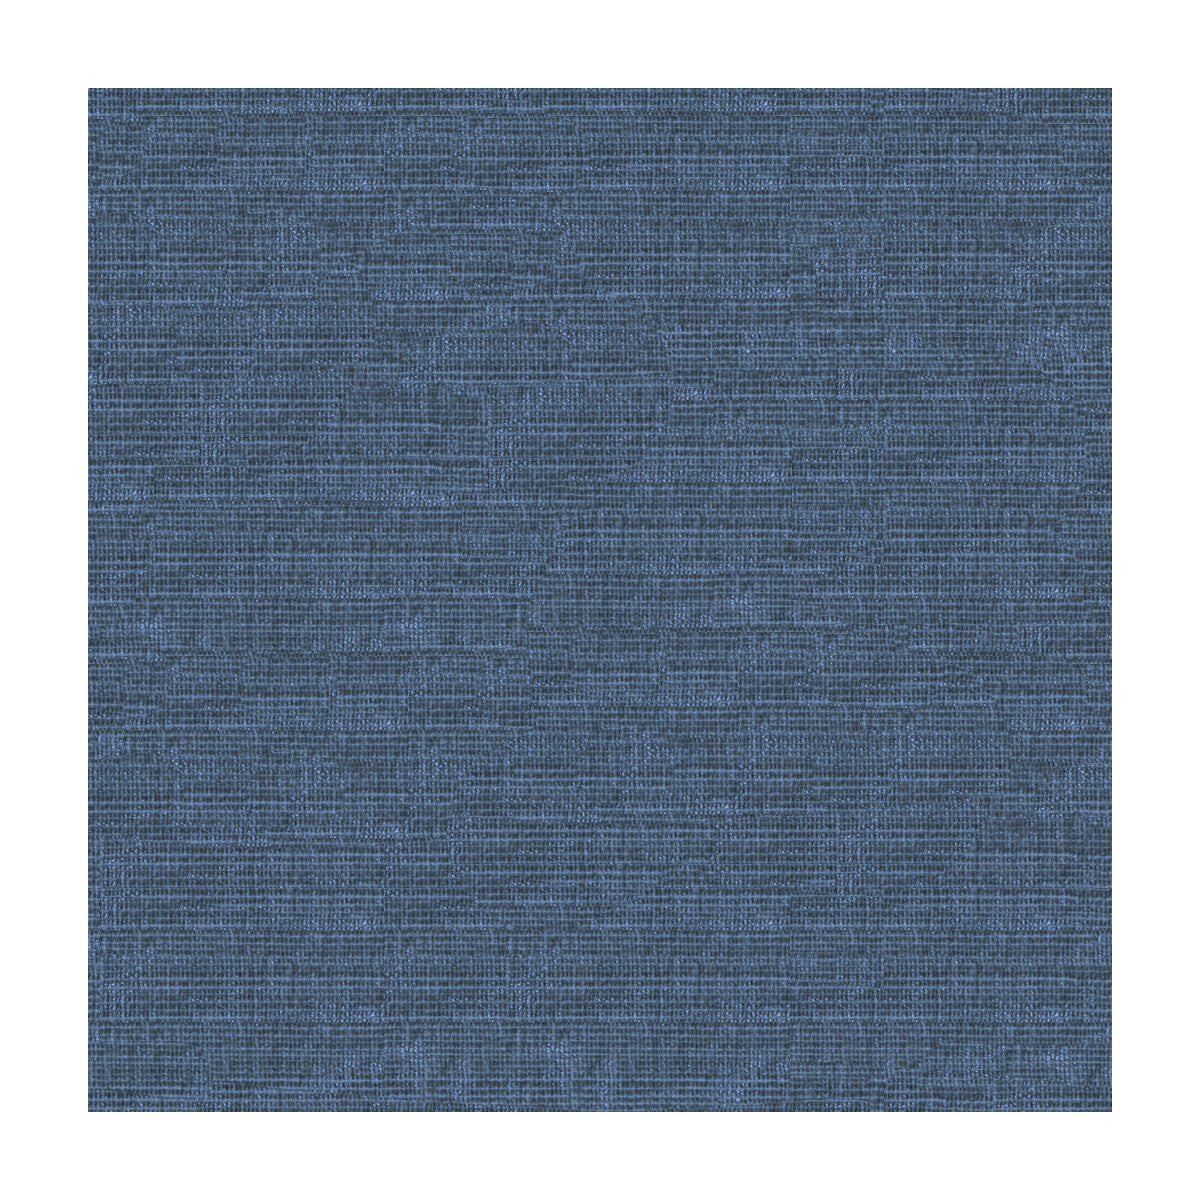 Kravet Smart fabric in 34191-515 color - pattern 34191.515.0 - by Kravet Smart